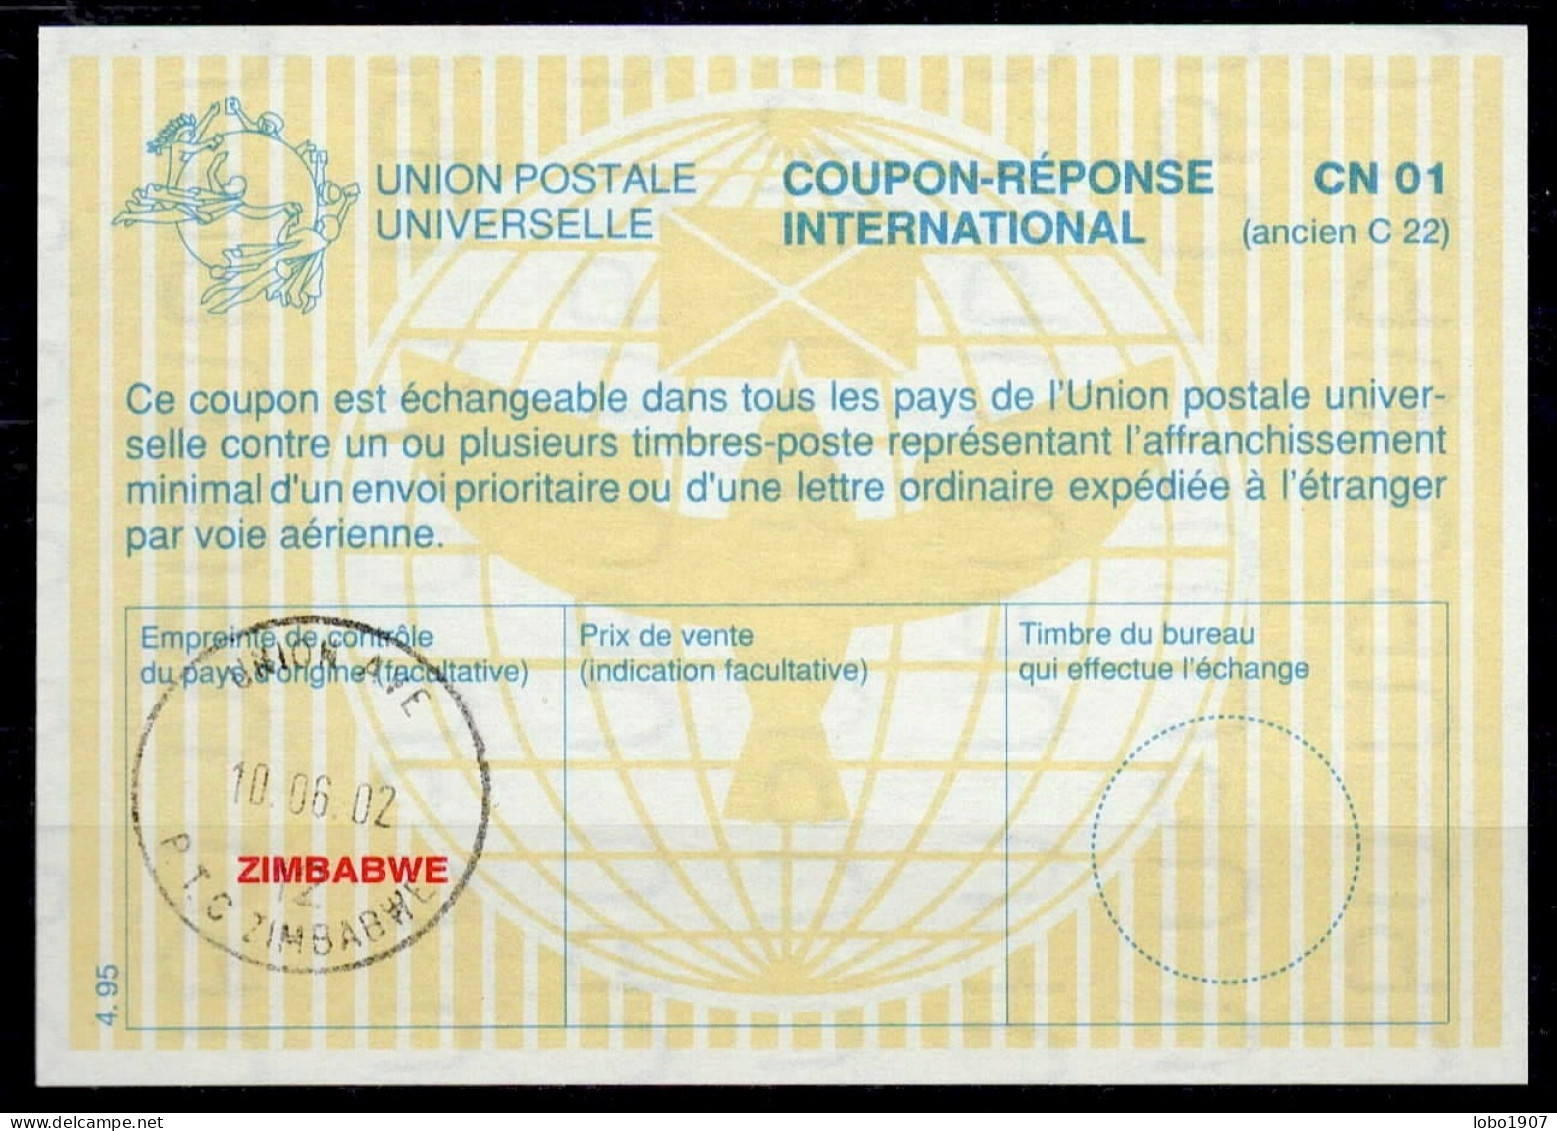 ZIMBABWE  La29C  International Reply Coupon Reponse Antwortschein Cupon Respuesta IRC IAS O UNION AVE. 10.06.2002 - Zimbabwe (1980-...)